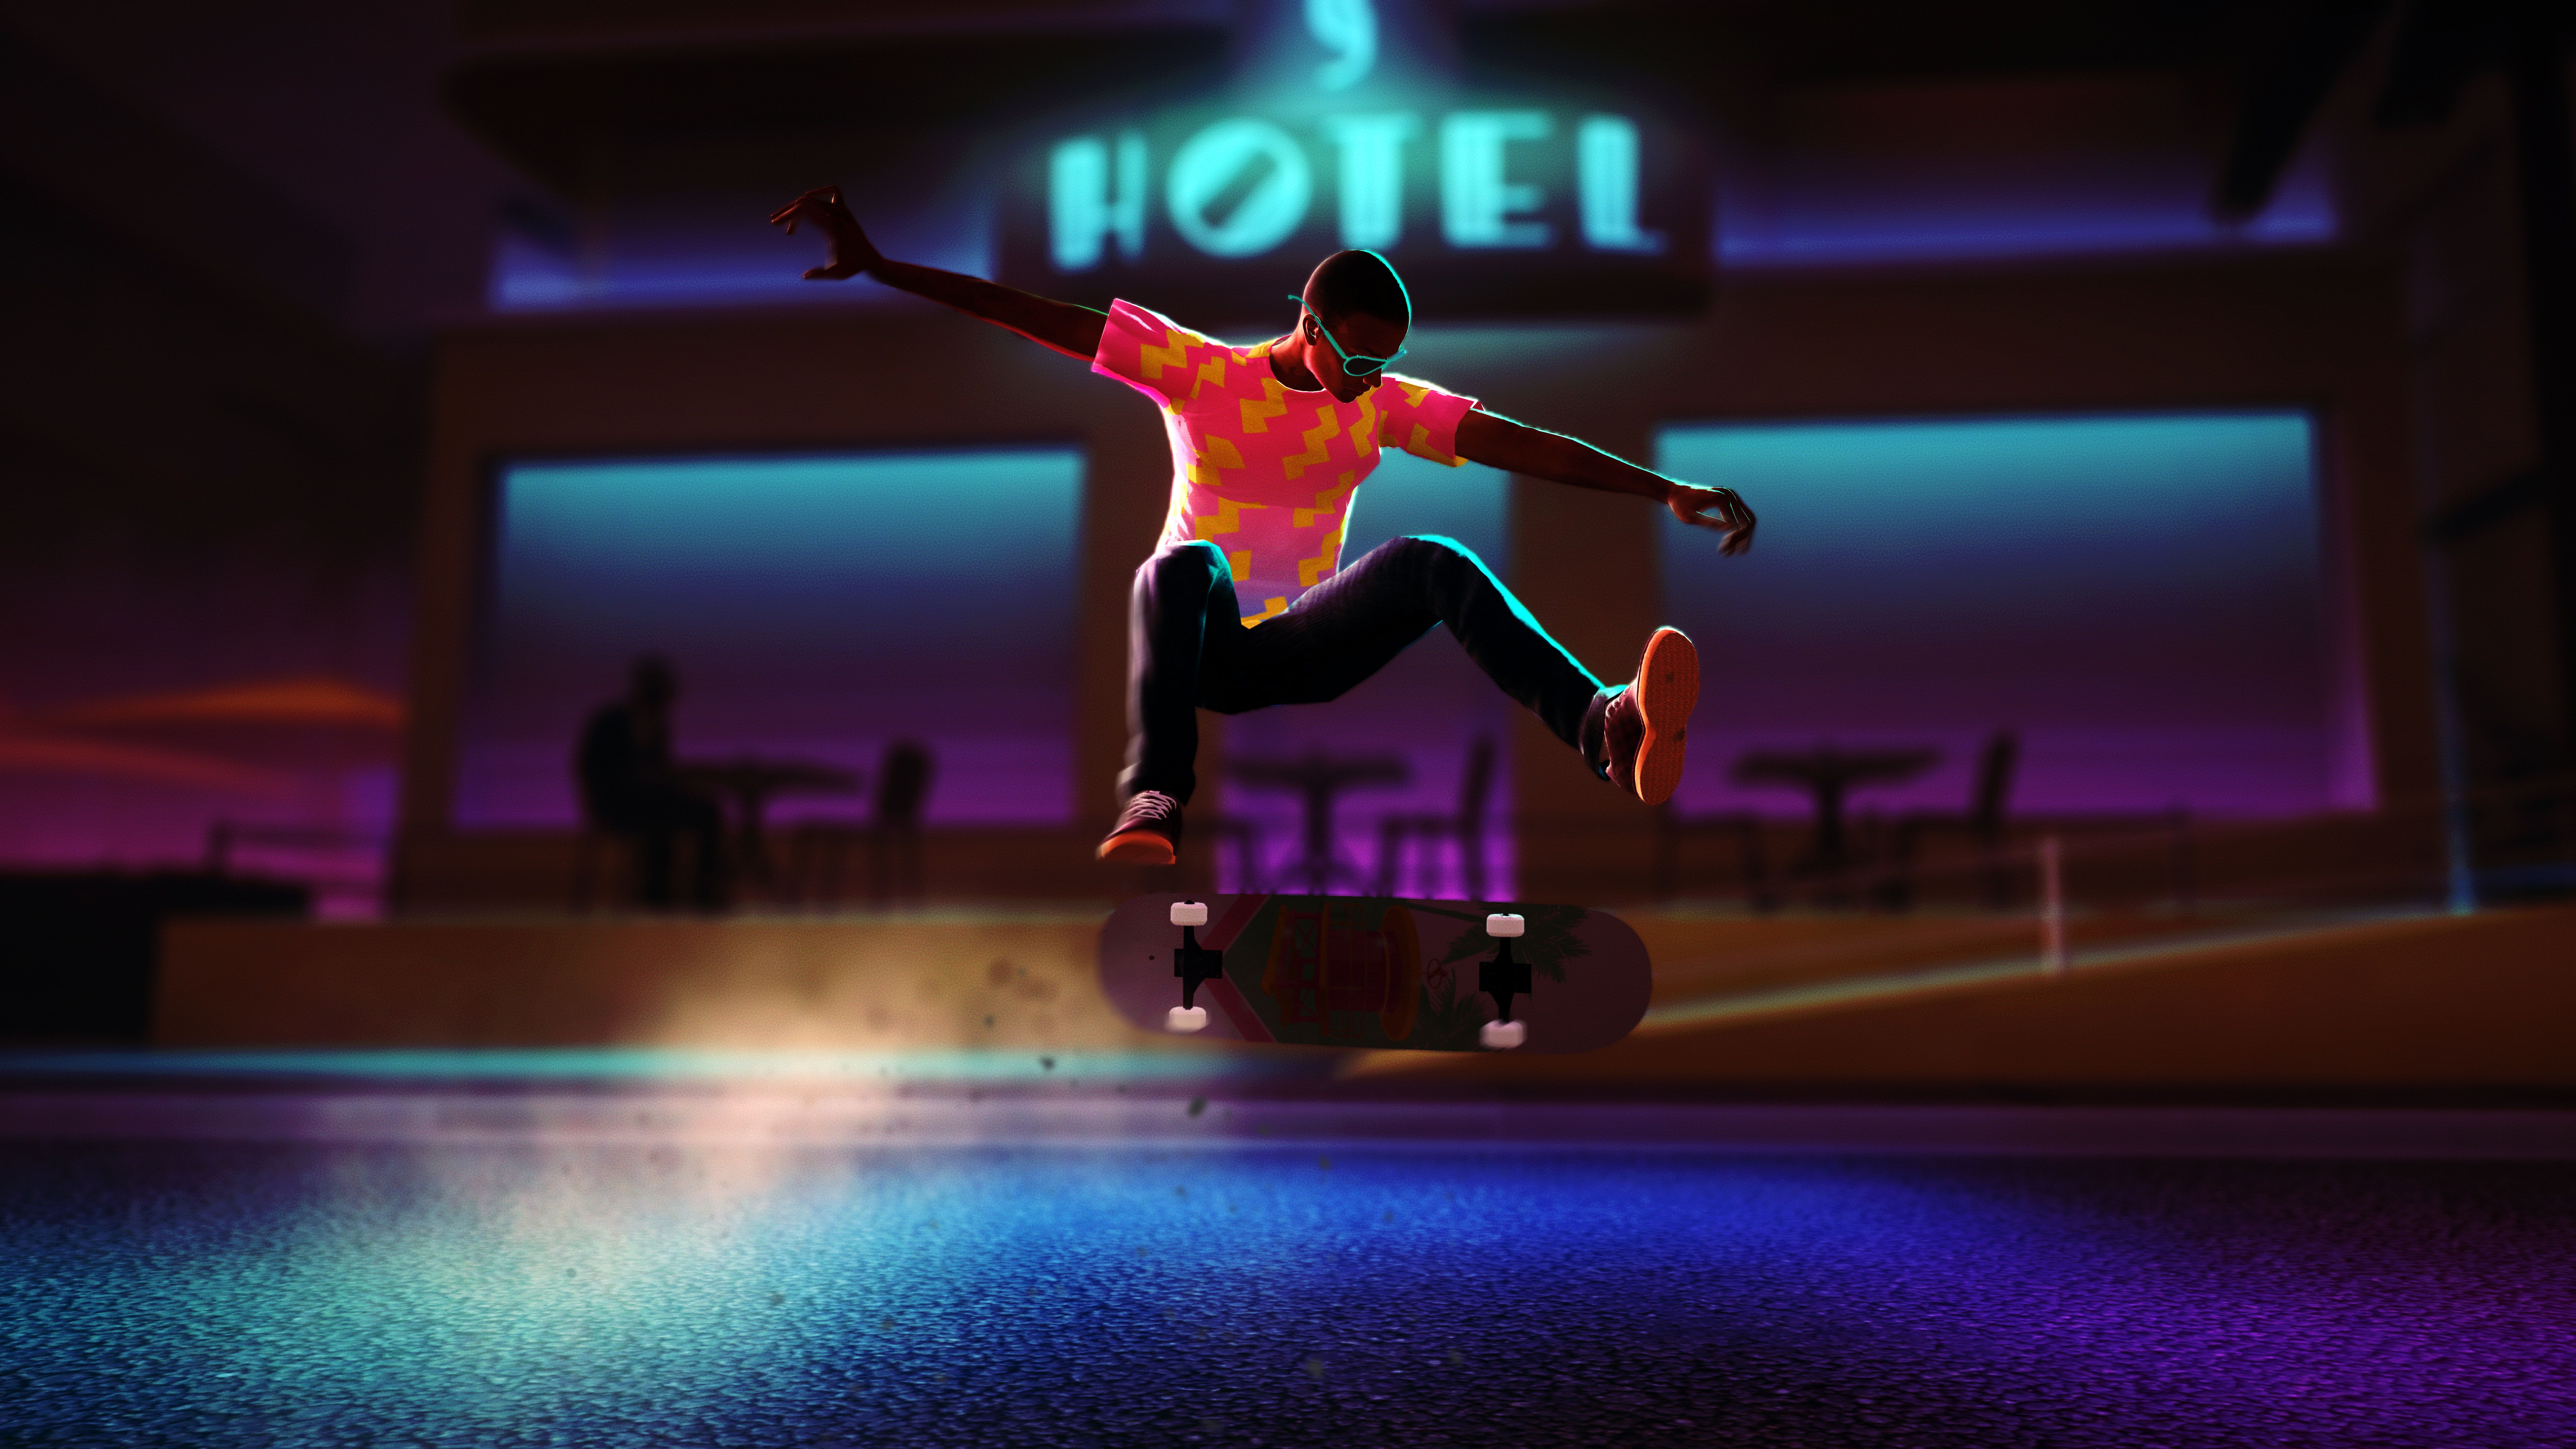 Skate City, Hotel